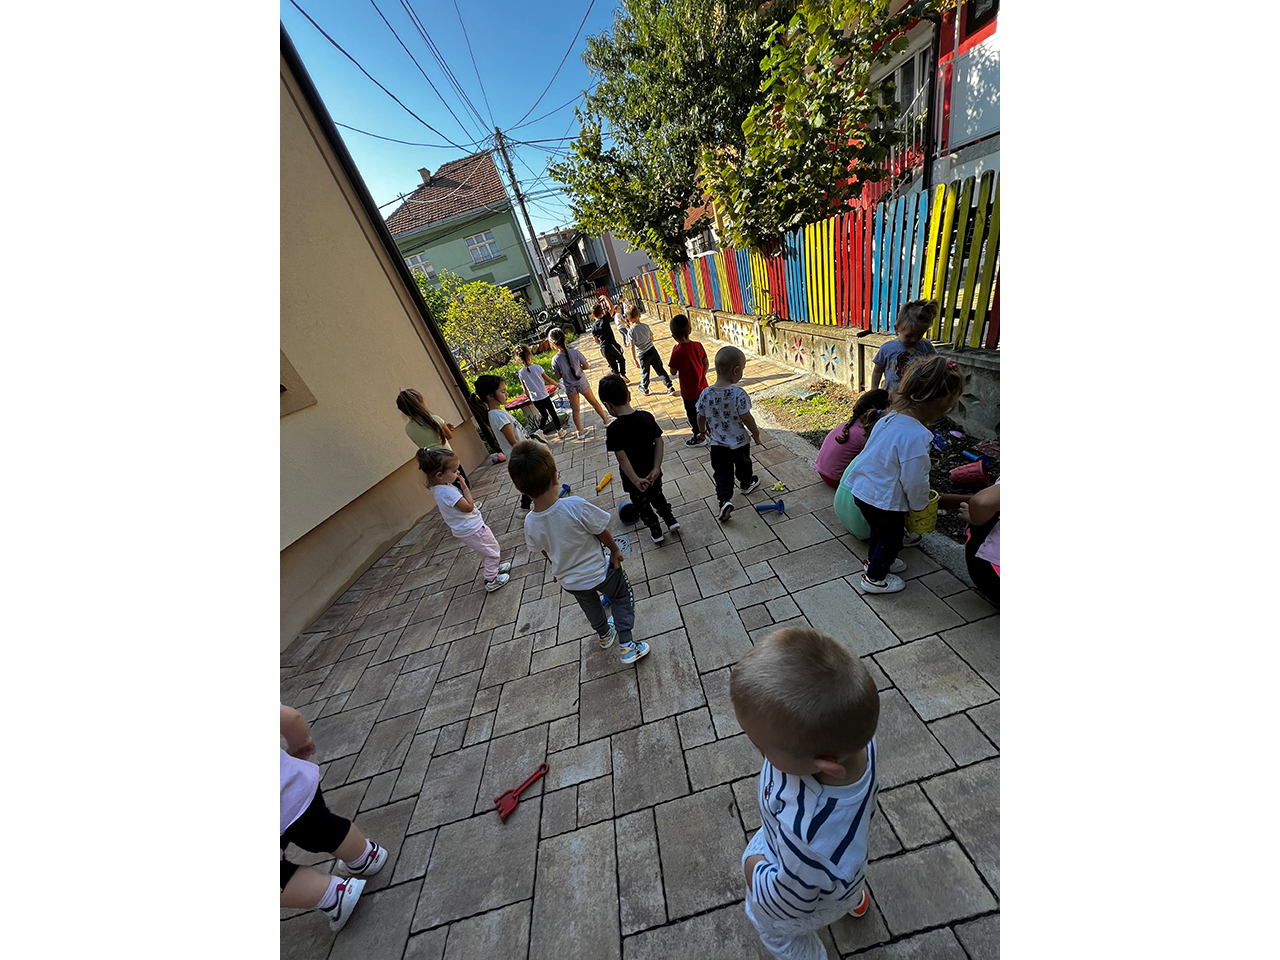 Photo 2 - ZMAJ KINDERGARDEN AND PLAYGROUND - Pre-school institutions and kindergarten, Cacak